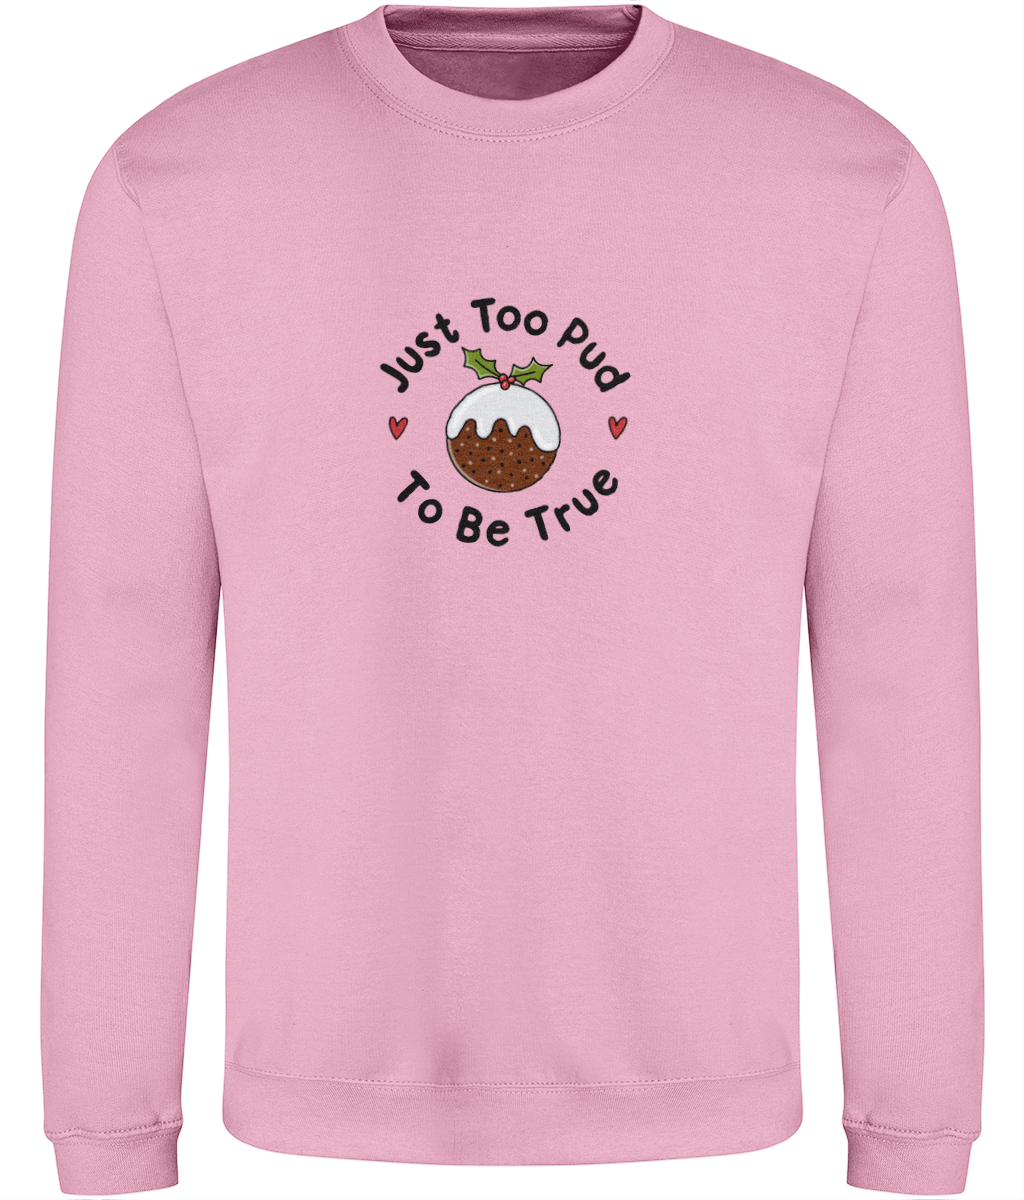 Just Too Pud To Be True - Sweatshirt (Multi Colour)